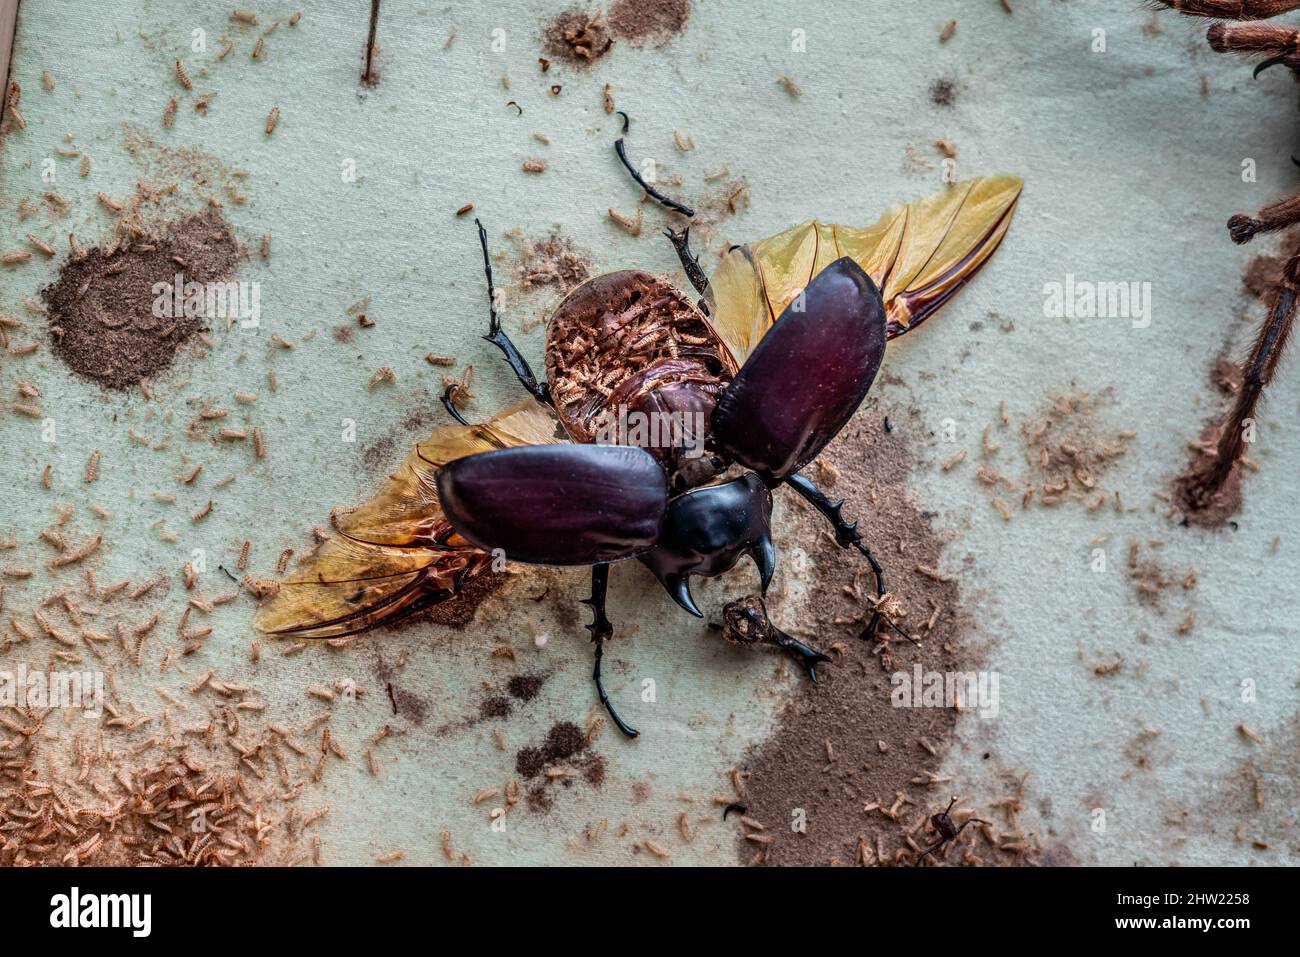 Beautiful male Actaeon beetle (Megasoma actaeon) destroyed by thousands of carpet beetle (Anthrenus verbasci) larvae. Fully eaten abdomen can be seen Stock Photo